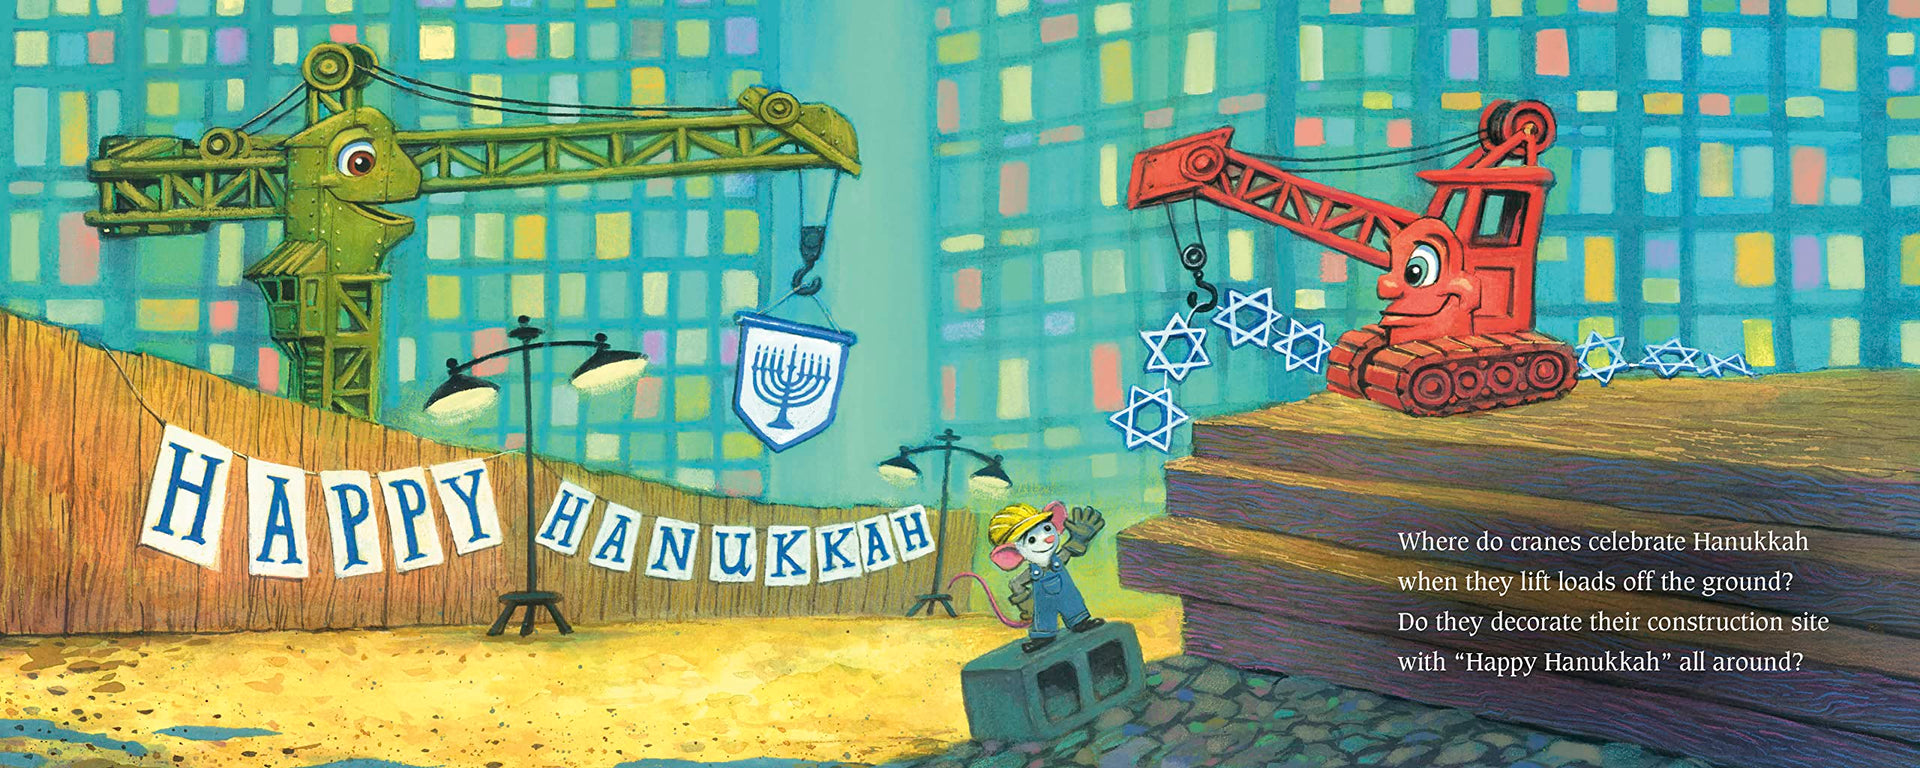 Random House Books Where Do Diggers Celebrate Hanukkah?